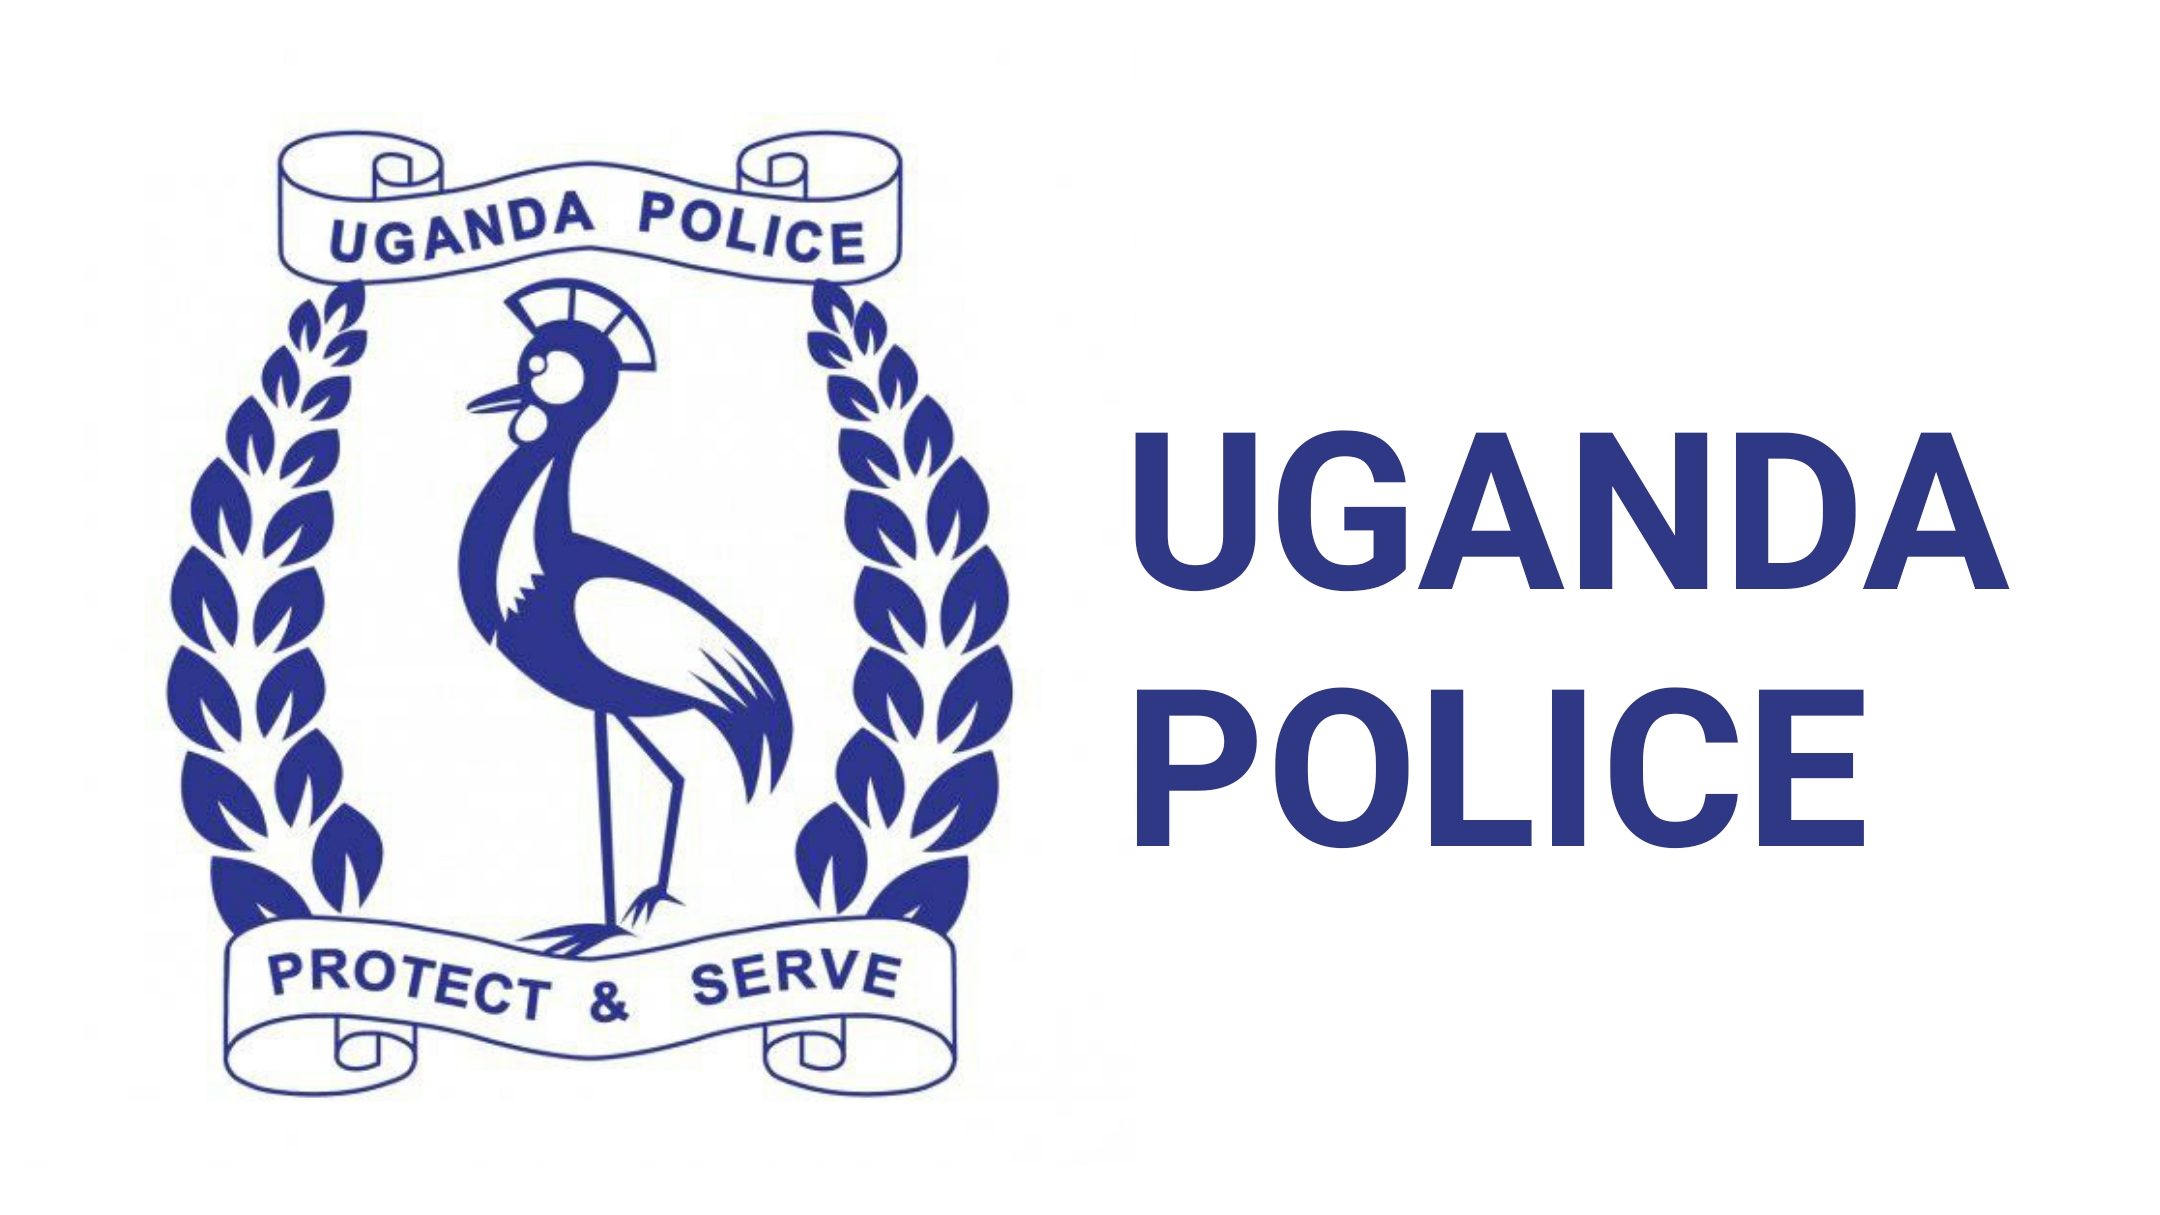 Uganda Police Image